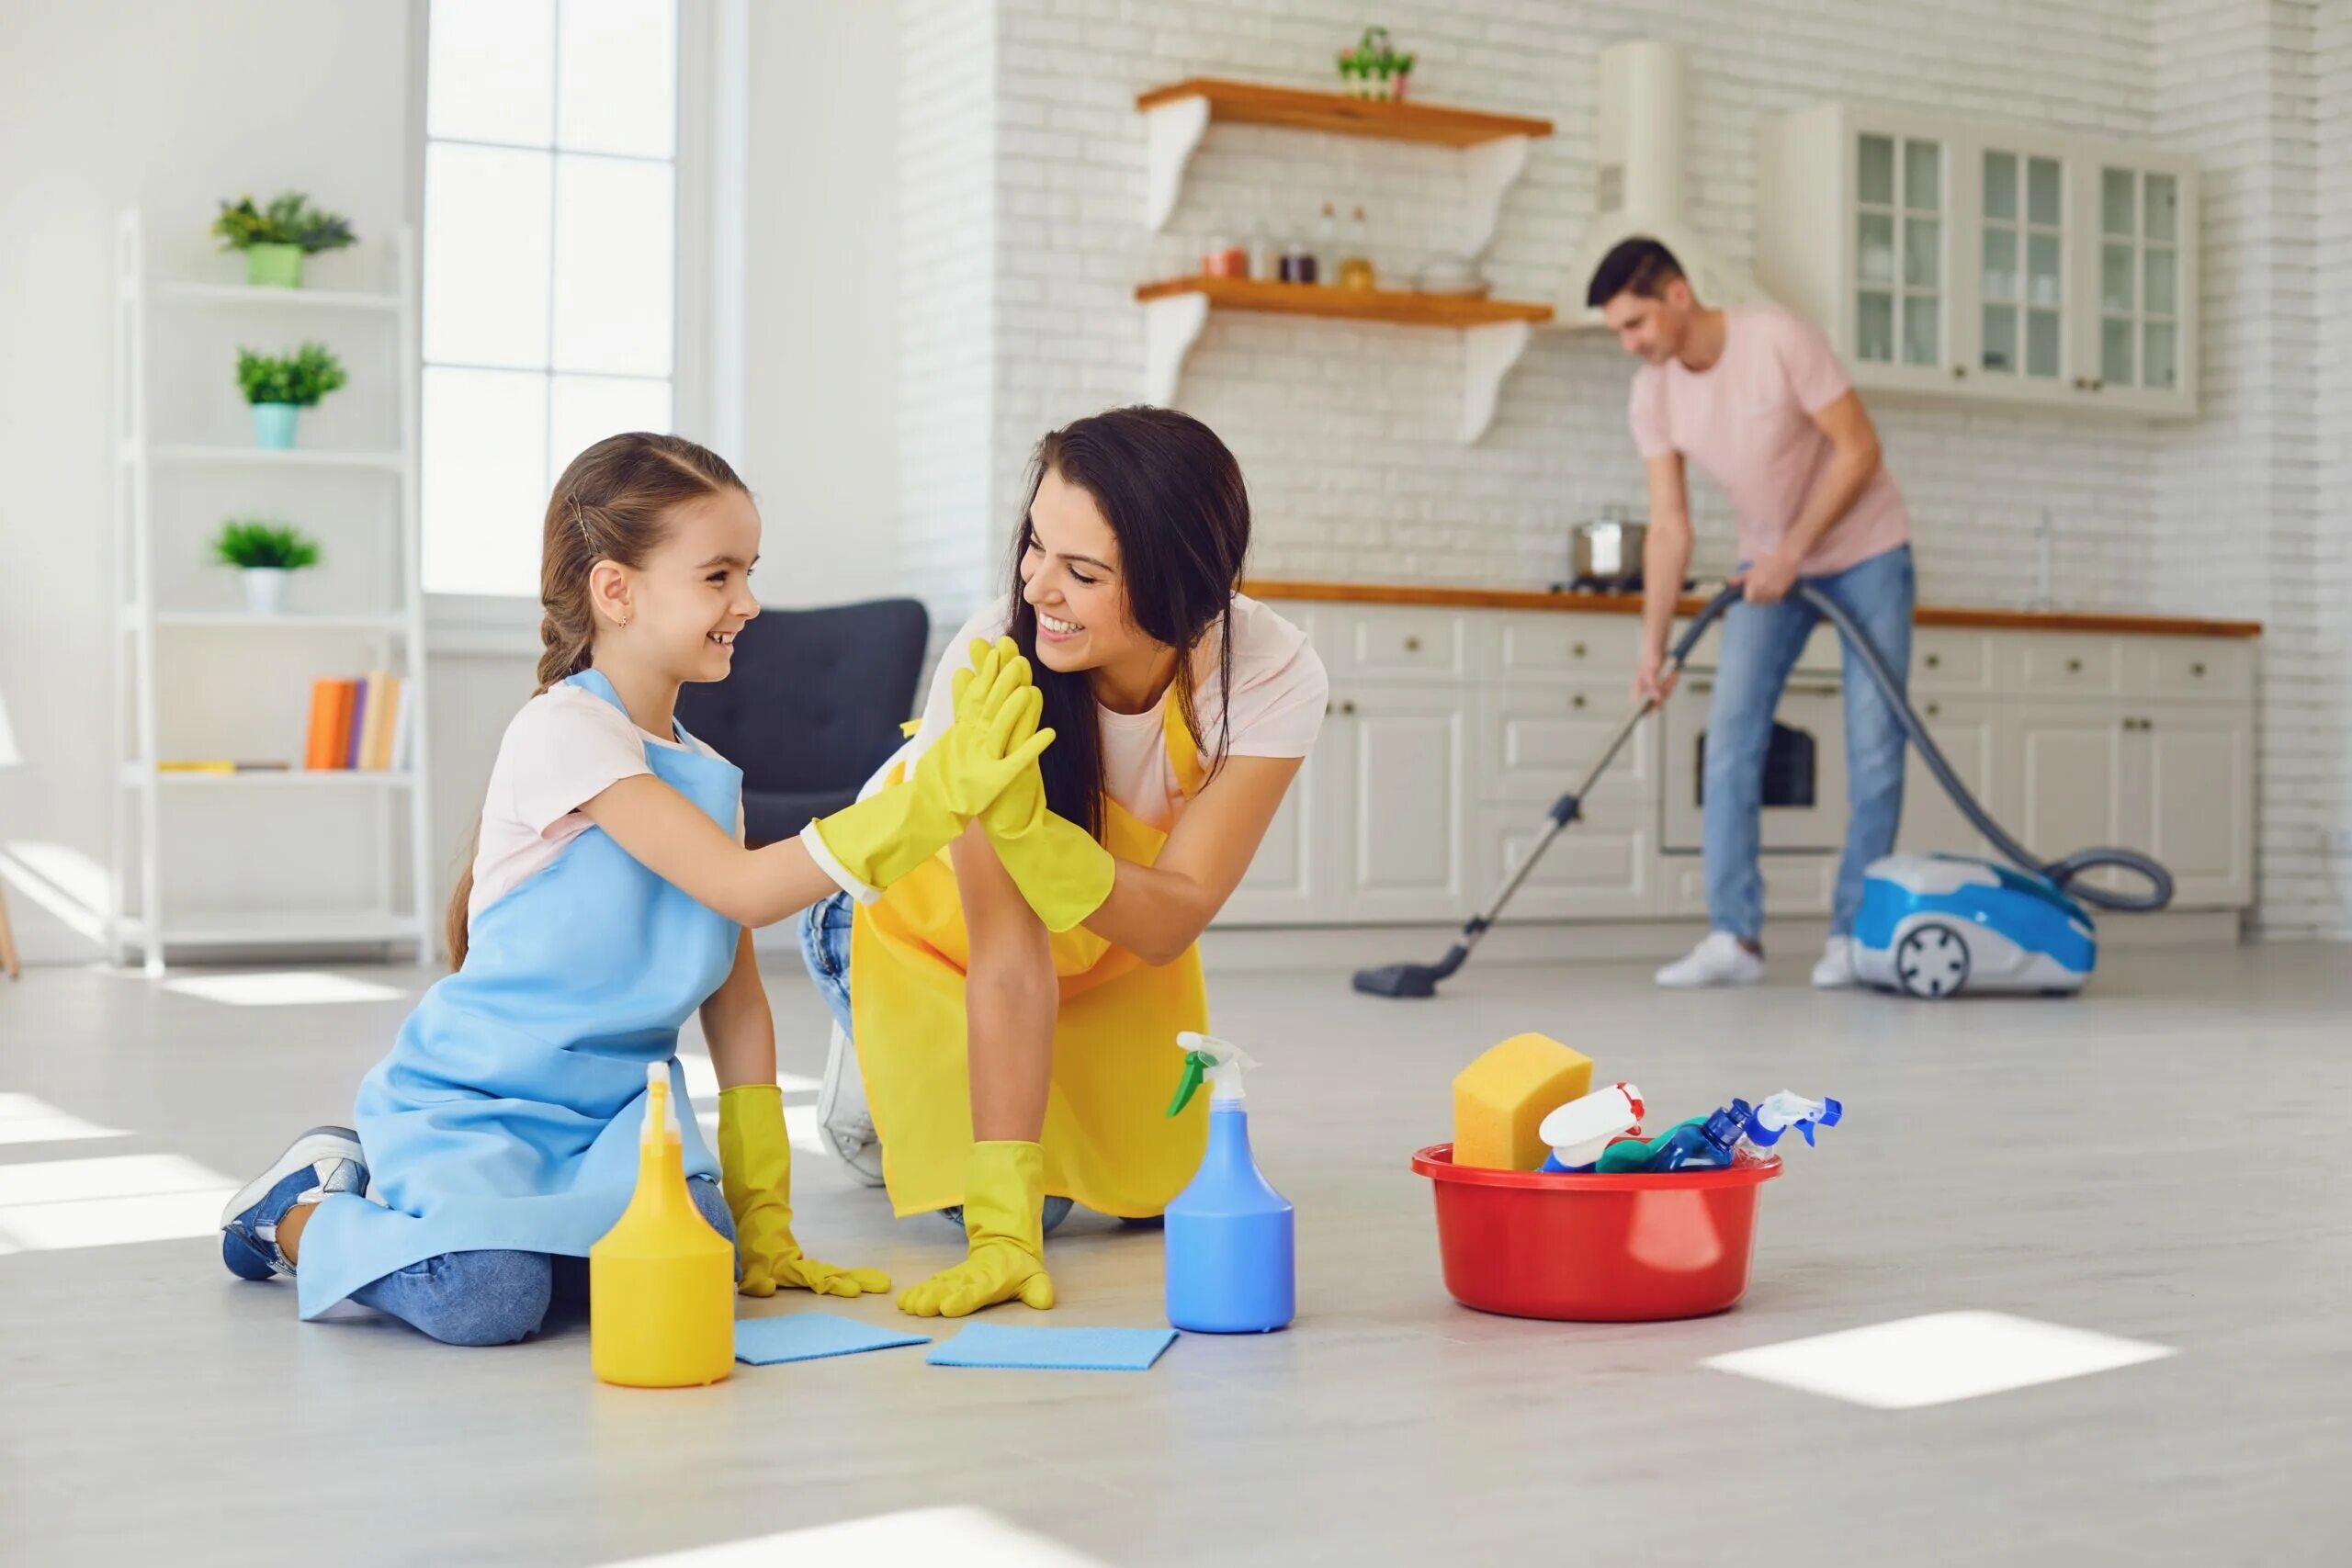 Cleaning up the mess. Семья убирается. Ребенок убирается. Семья уборка в доме. Уборка в комнате всей семьей.